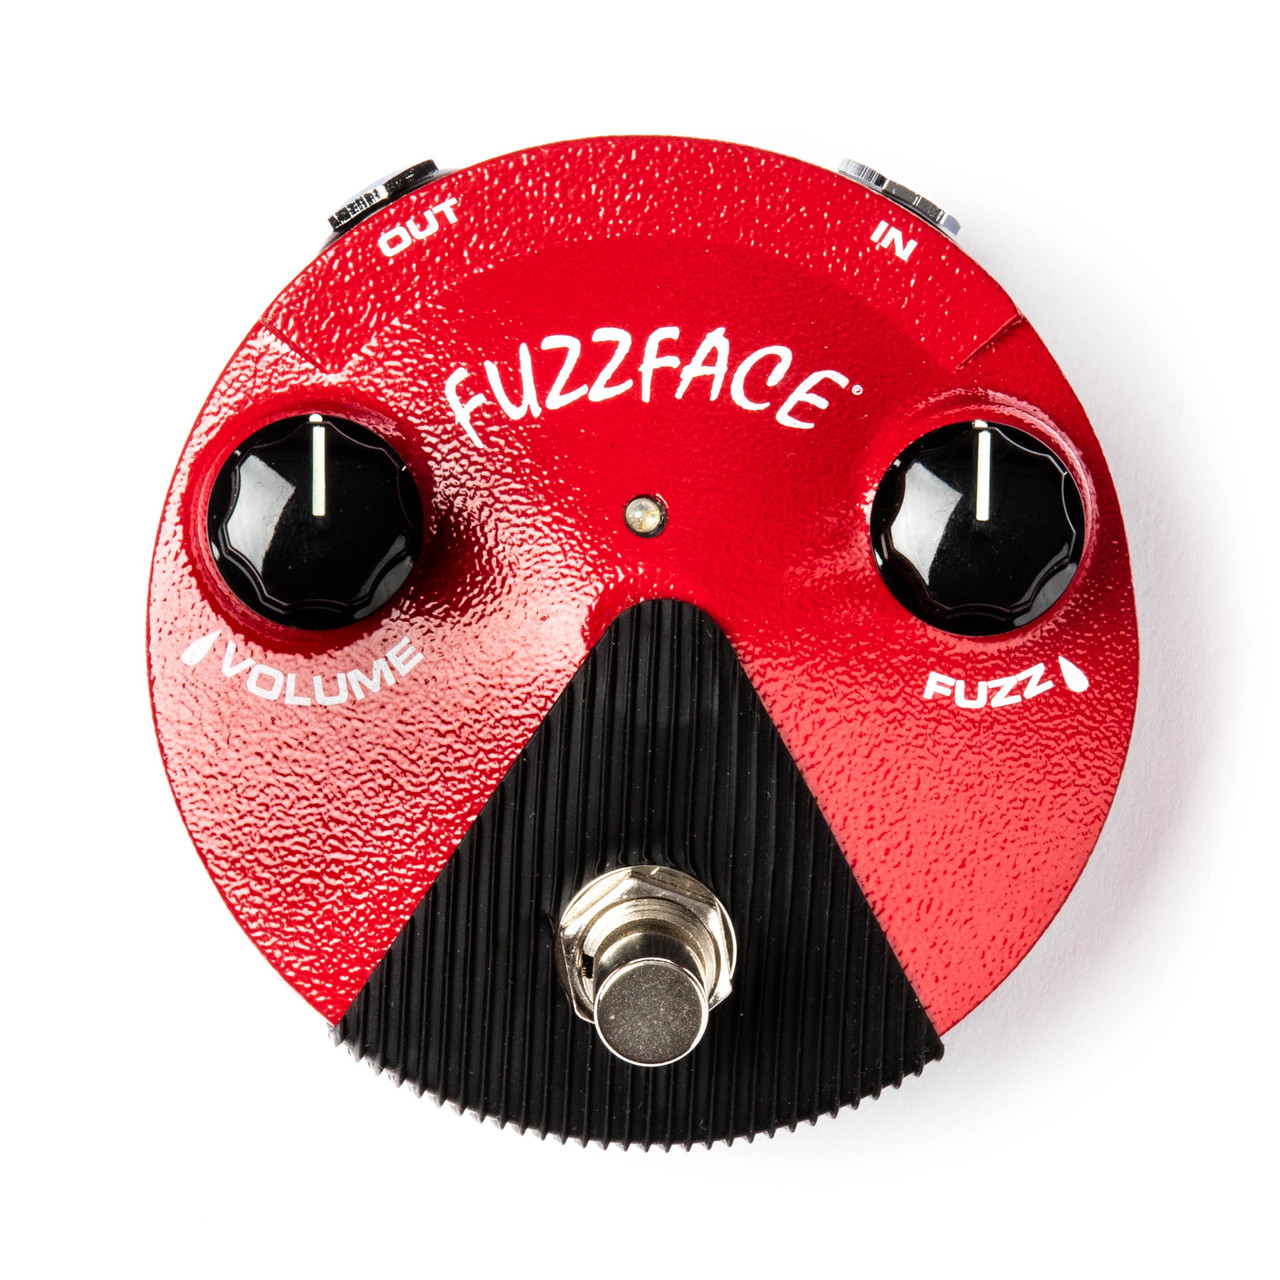 Dunlop FFM2 GE Fuzz Face Mini Distortion Pedal